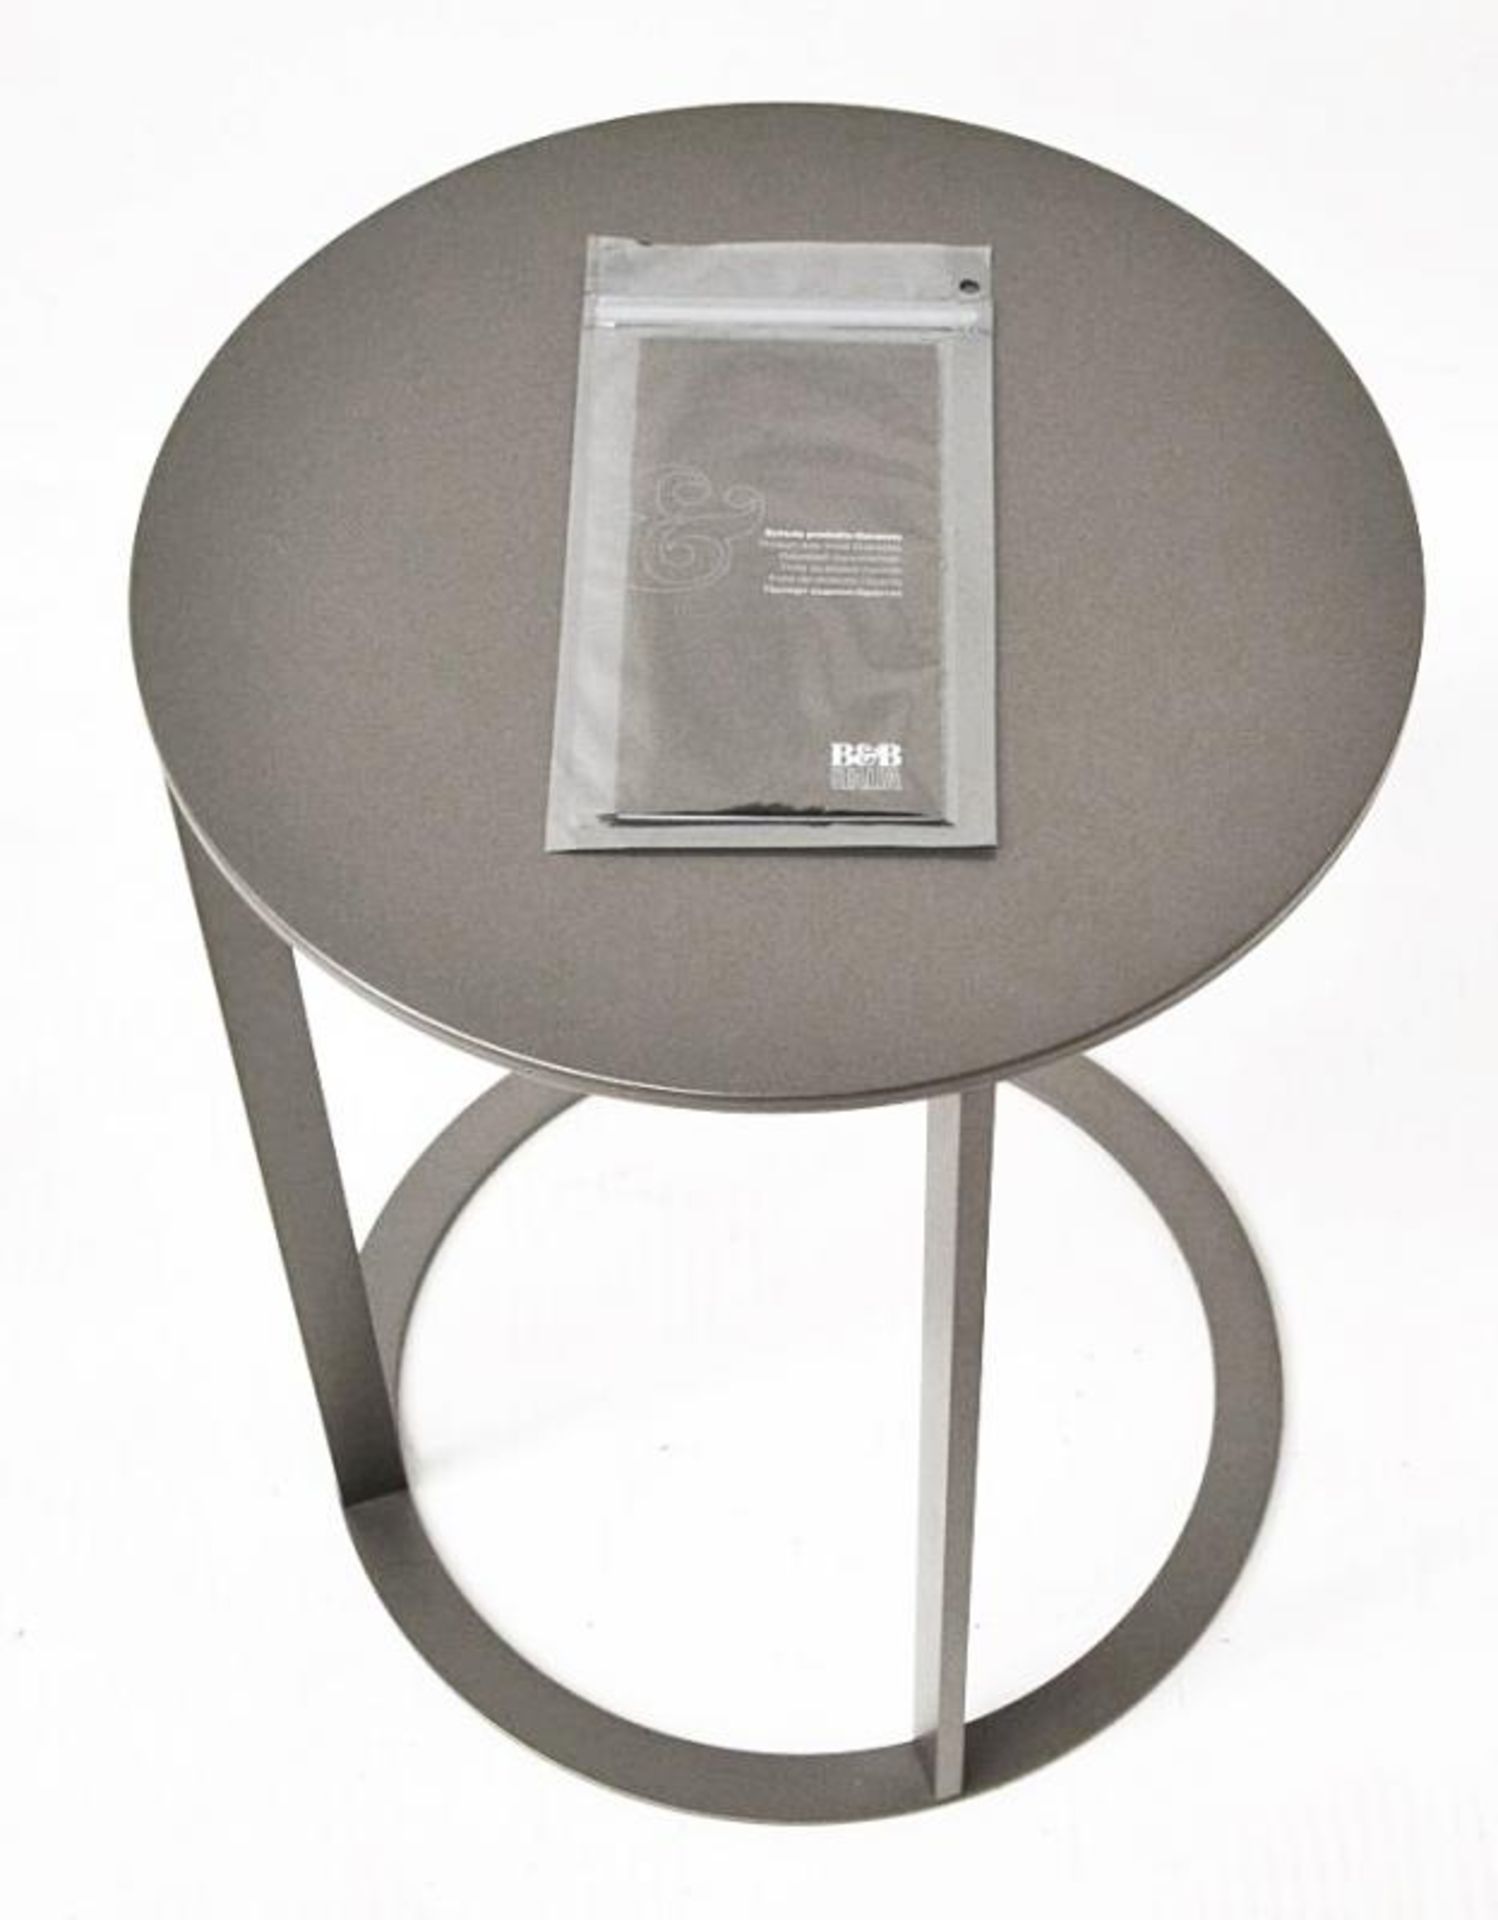 1 x B&B Italia / MAXALTO 'Frank' Small Table Topped With Black Slate - Dimensions: Height 47cm, Diam - Image 4 of 7